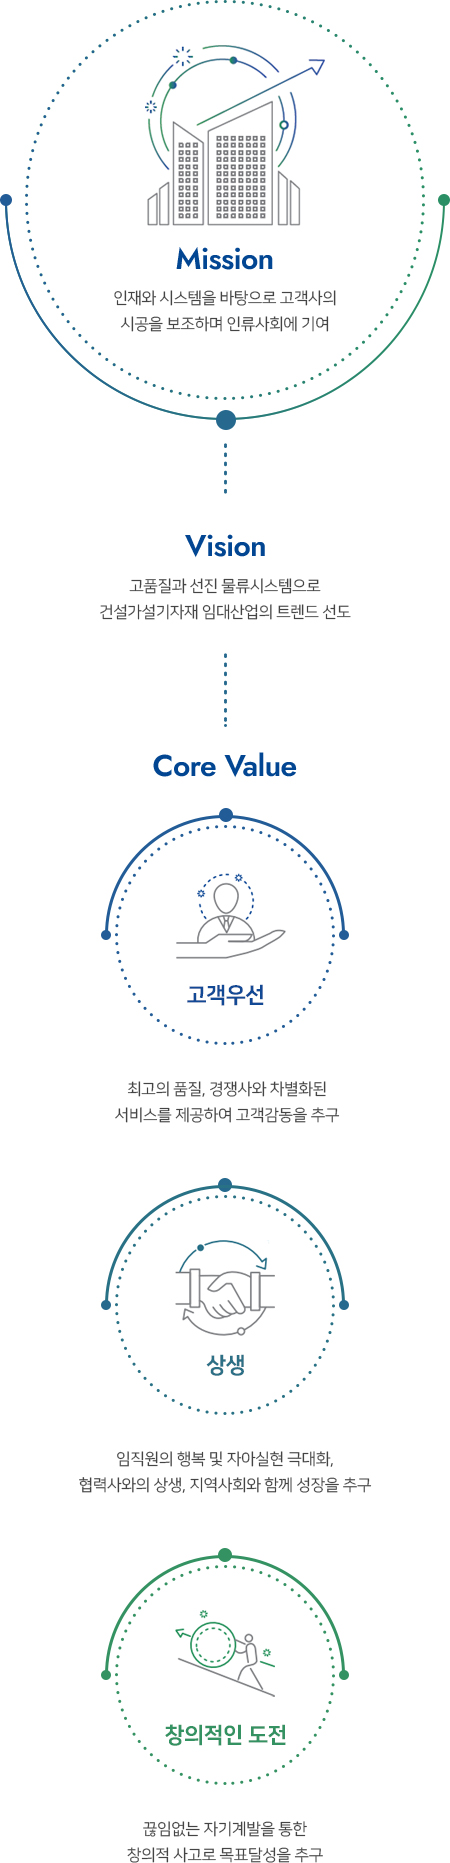 Mission, Vision, Core Value, 인재상 도전과 혁신의 대한민국 리더